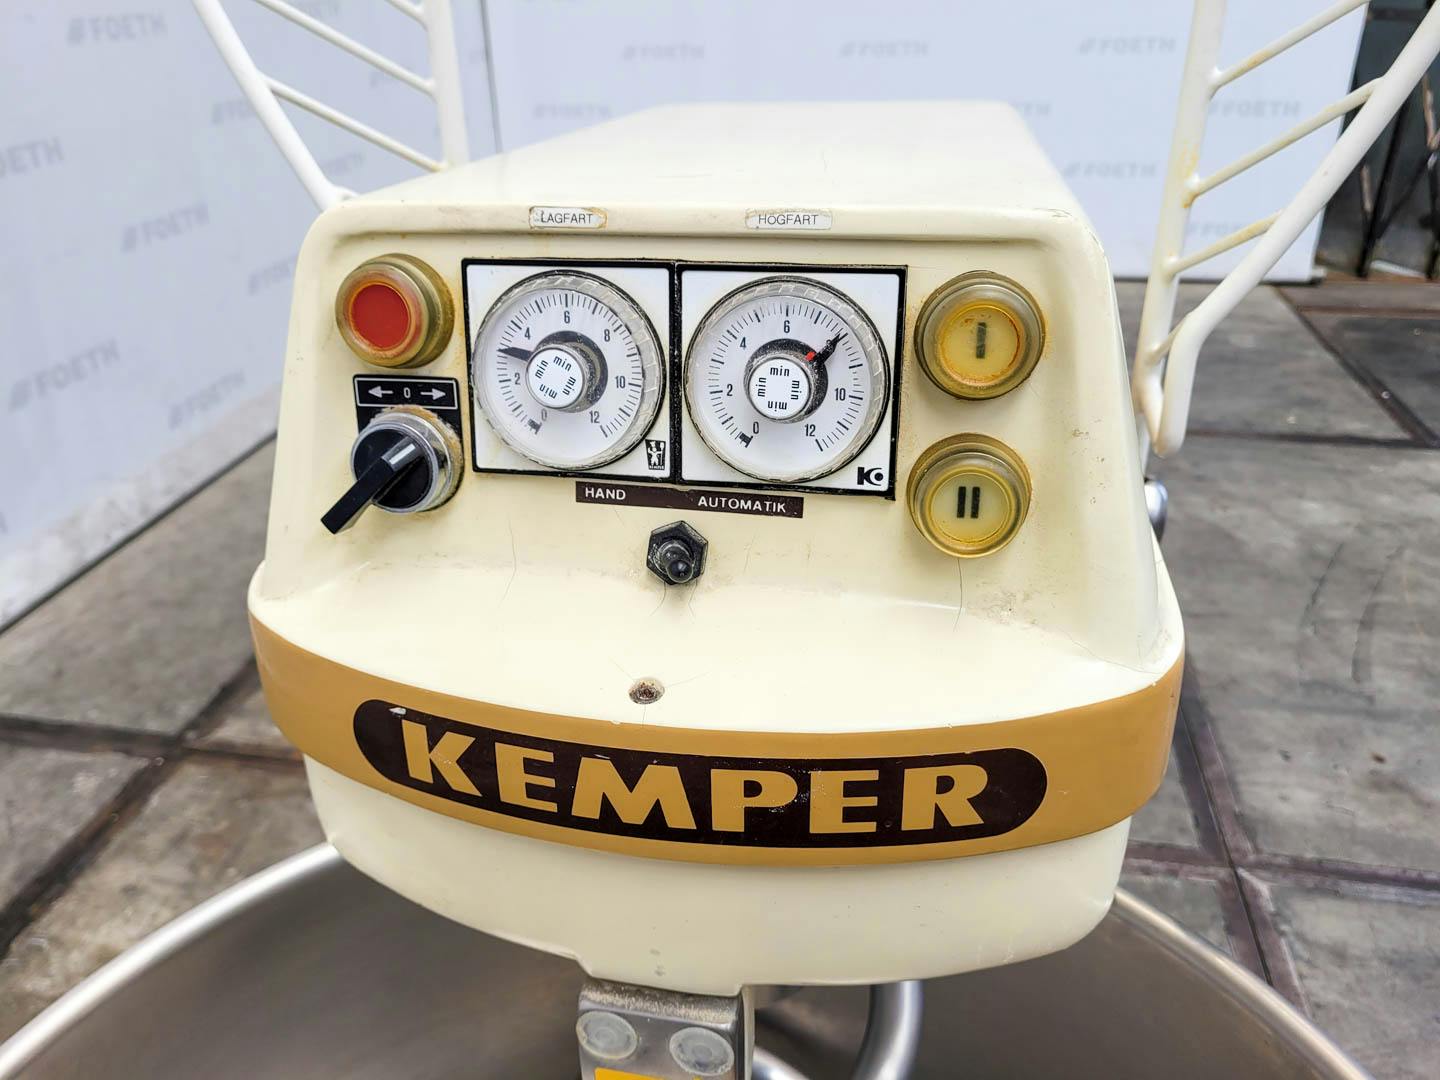 Kemper GmbH Spiral SP 50 L - Planeetmenger - image 6